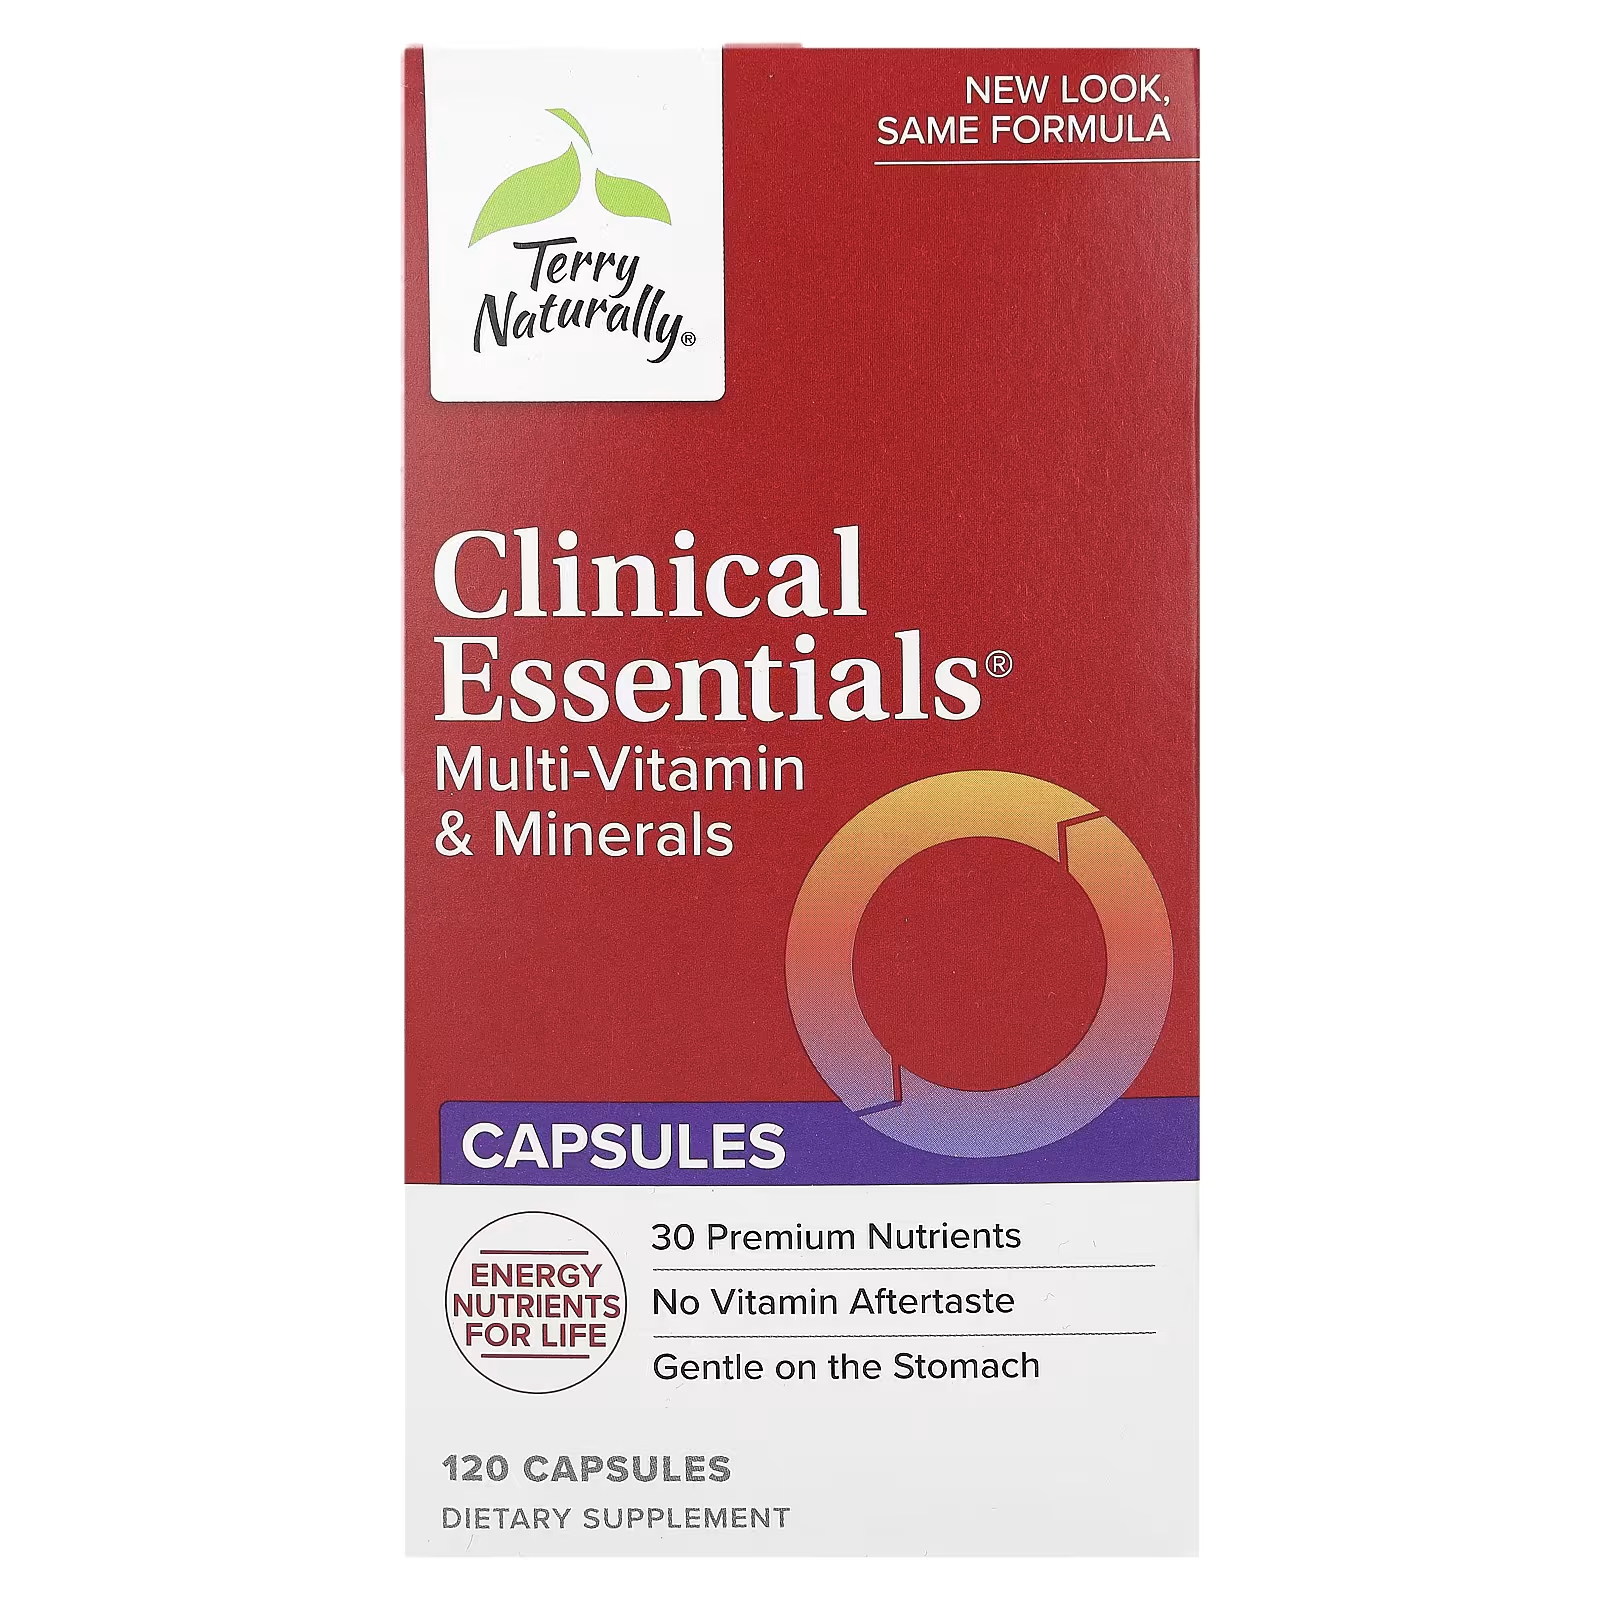 Terry Naturally Clinical Essentials Мультивитамины и минералы 120 капсул europharma terry naturally clinical essentials мультивитамины и минералы 60 таблеток